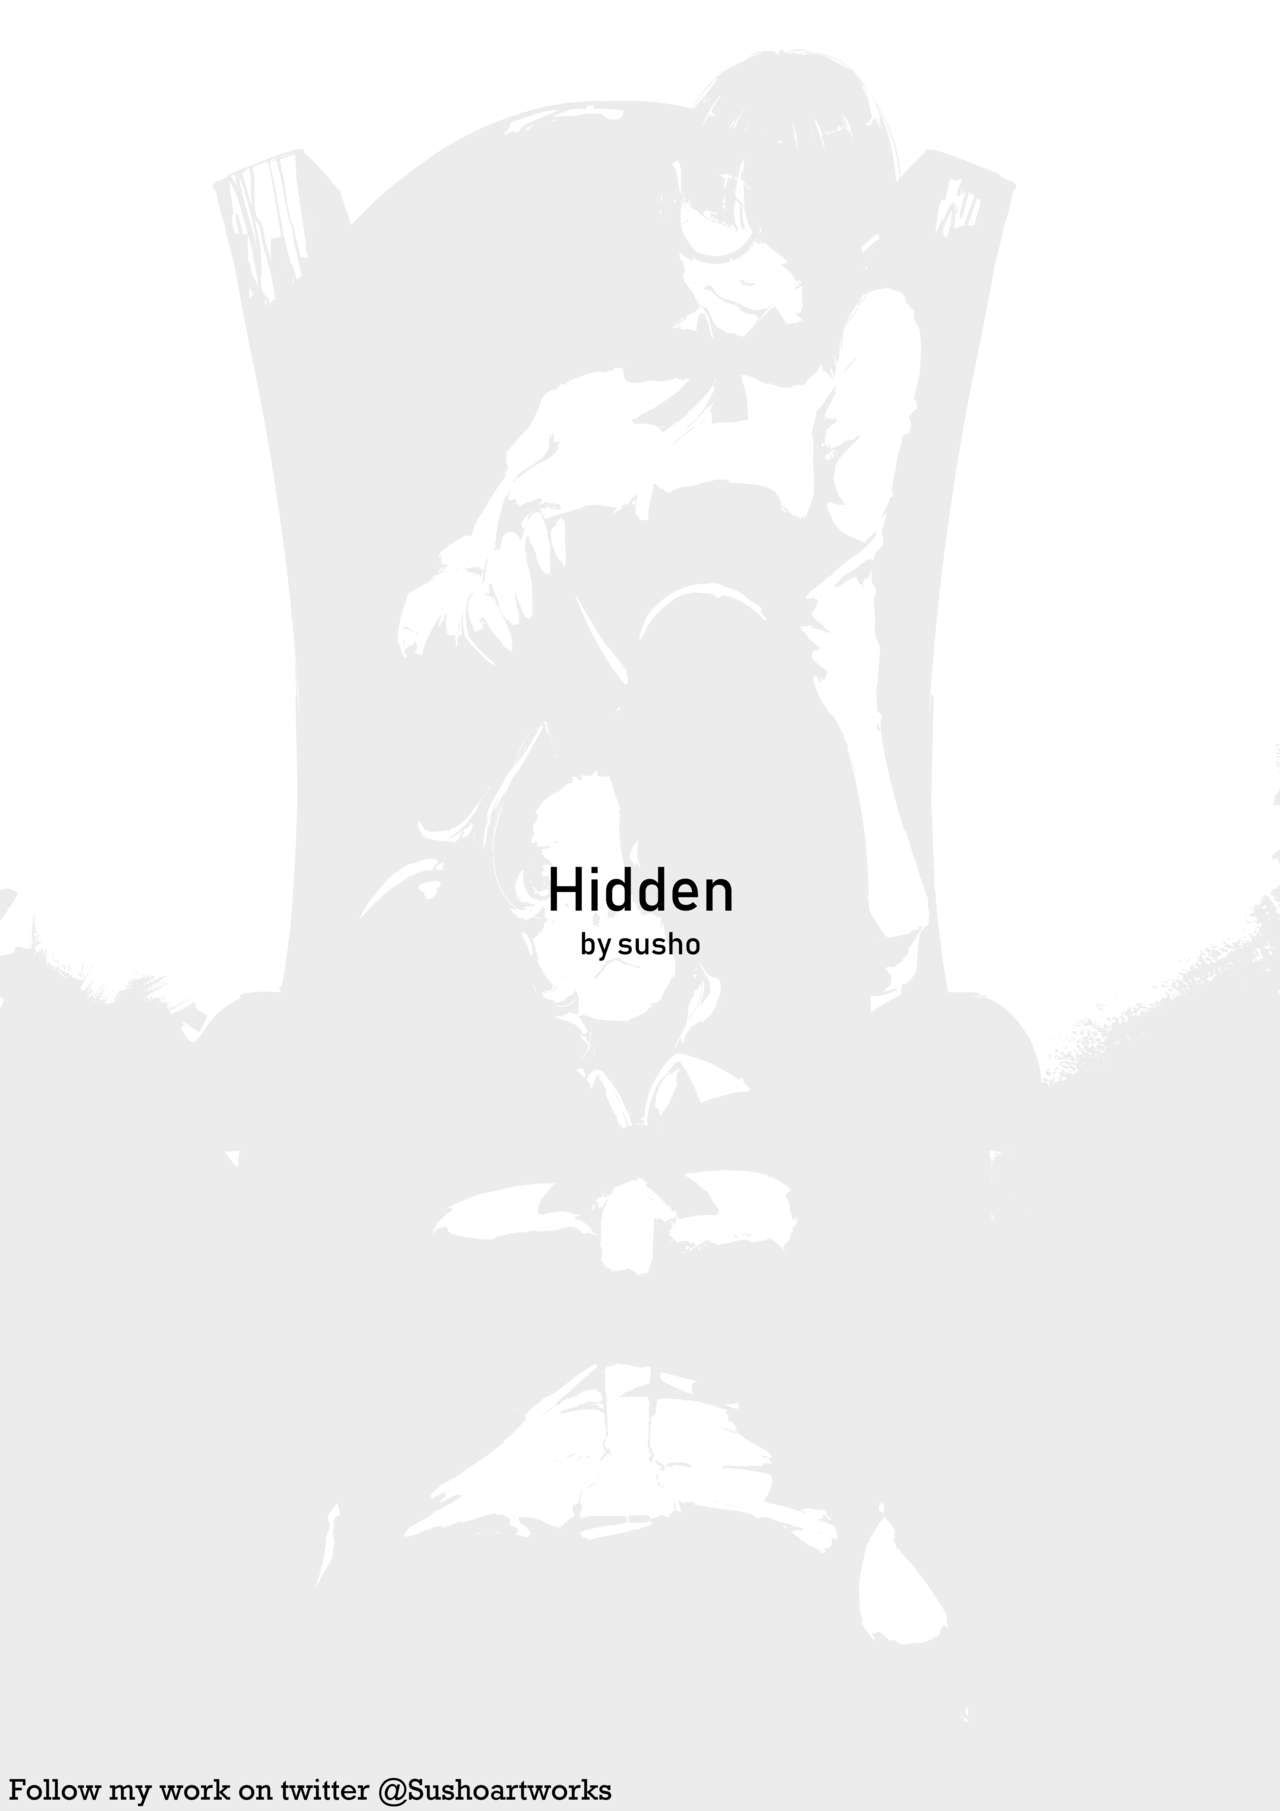 Hidden - Susho page 2